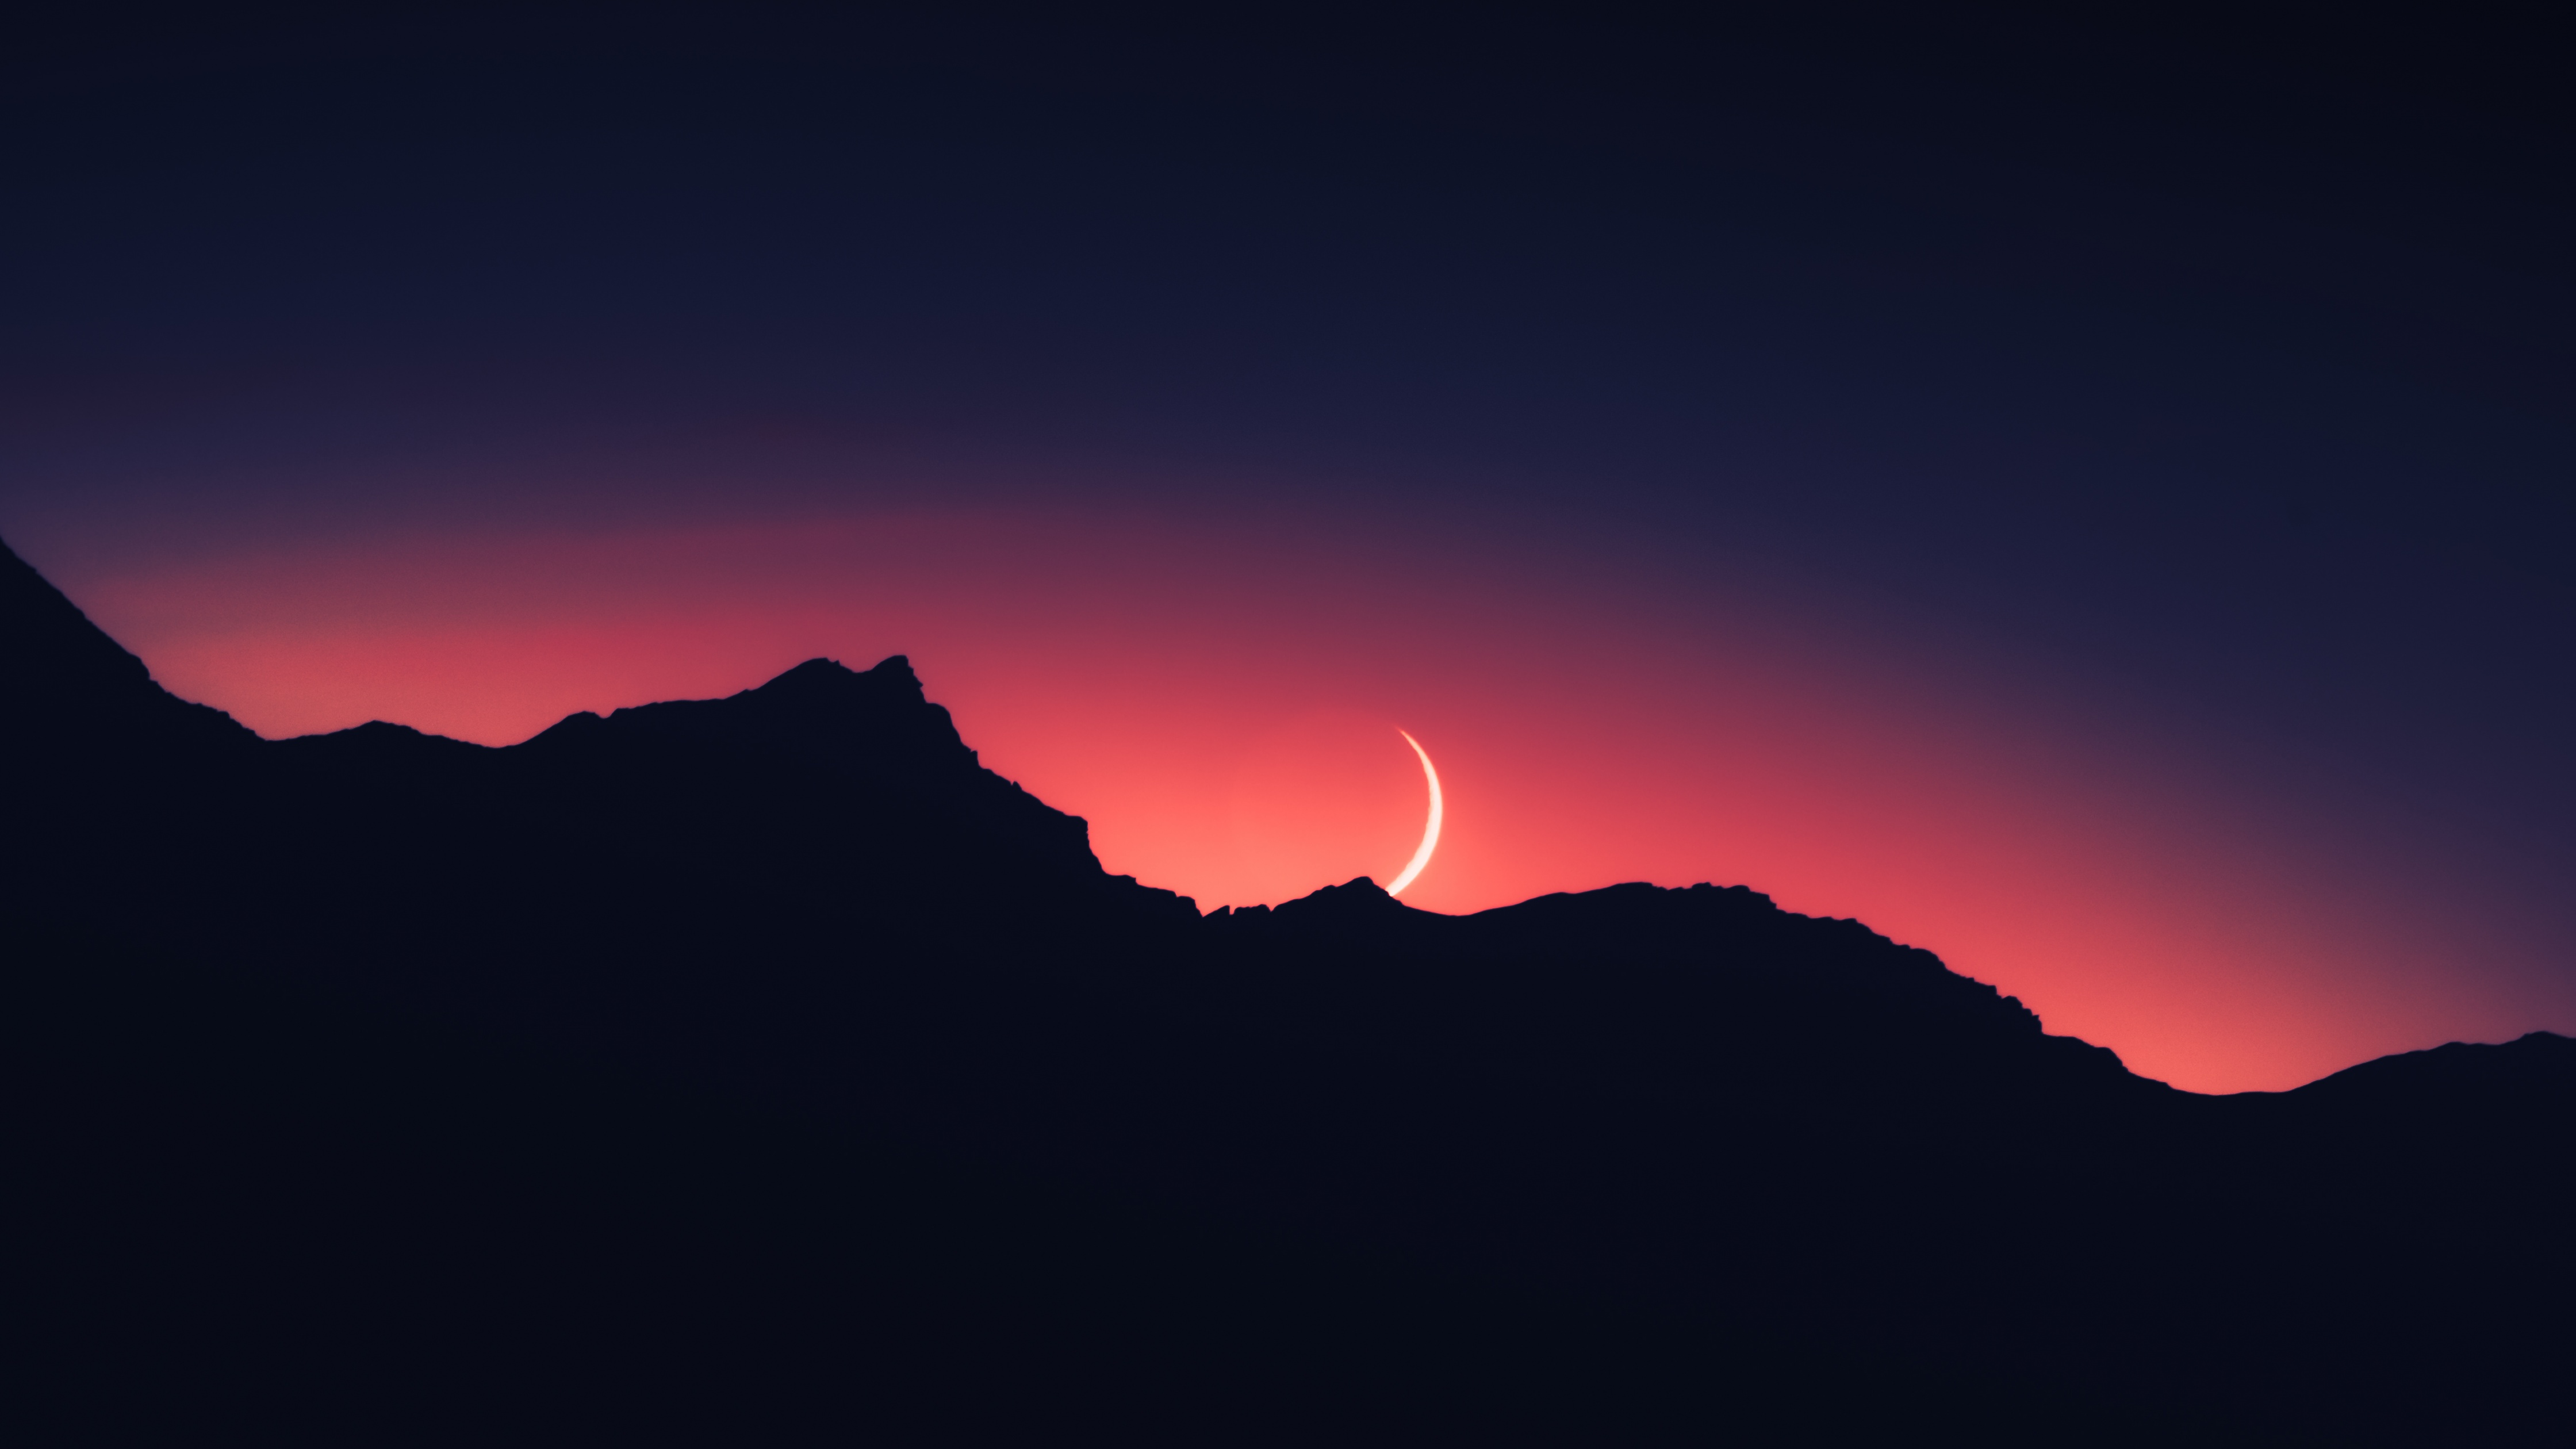 mountain sunset background